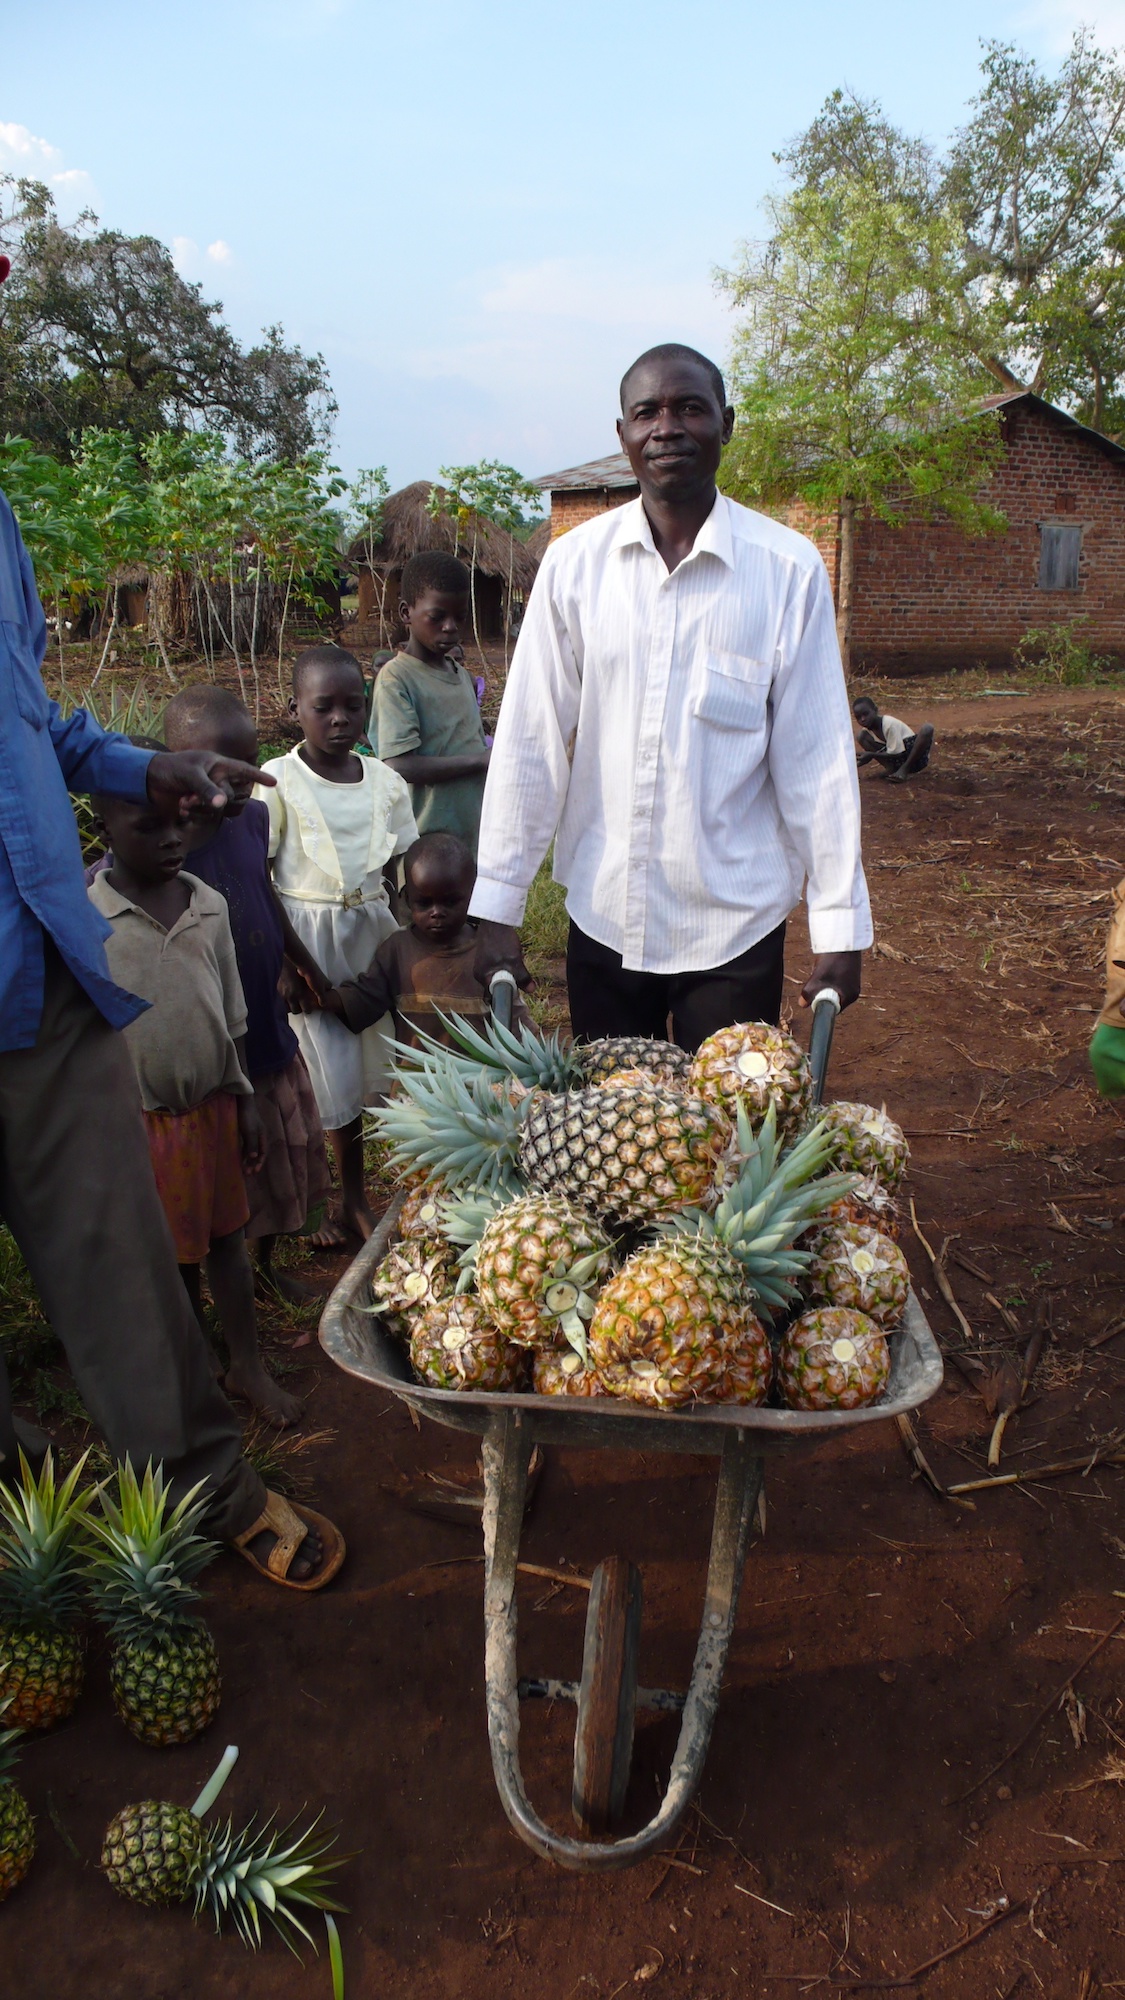 Man with wheelbarrow full of pineapples